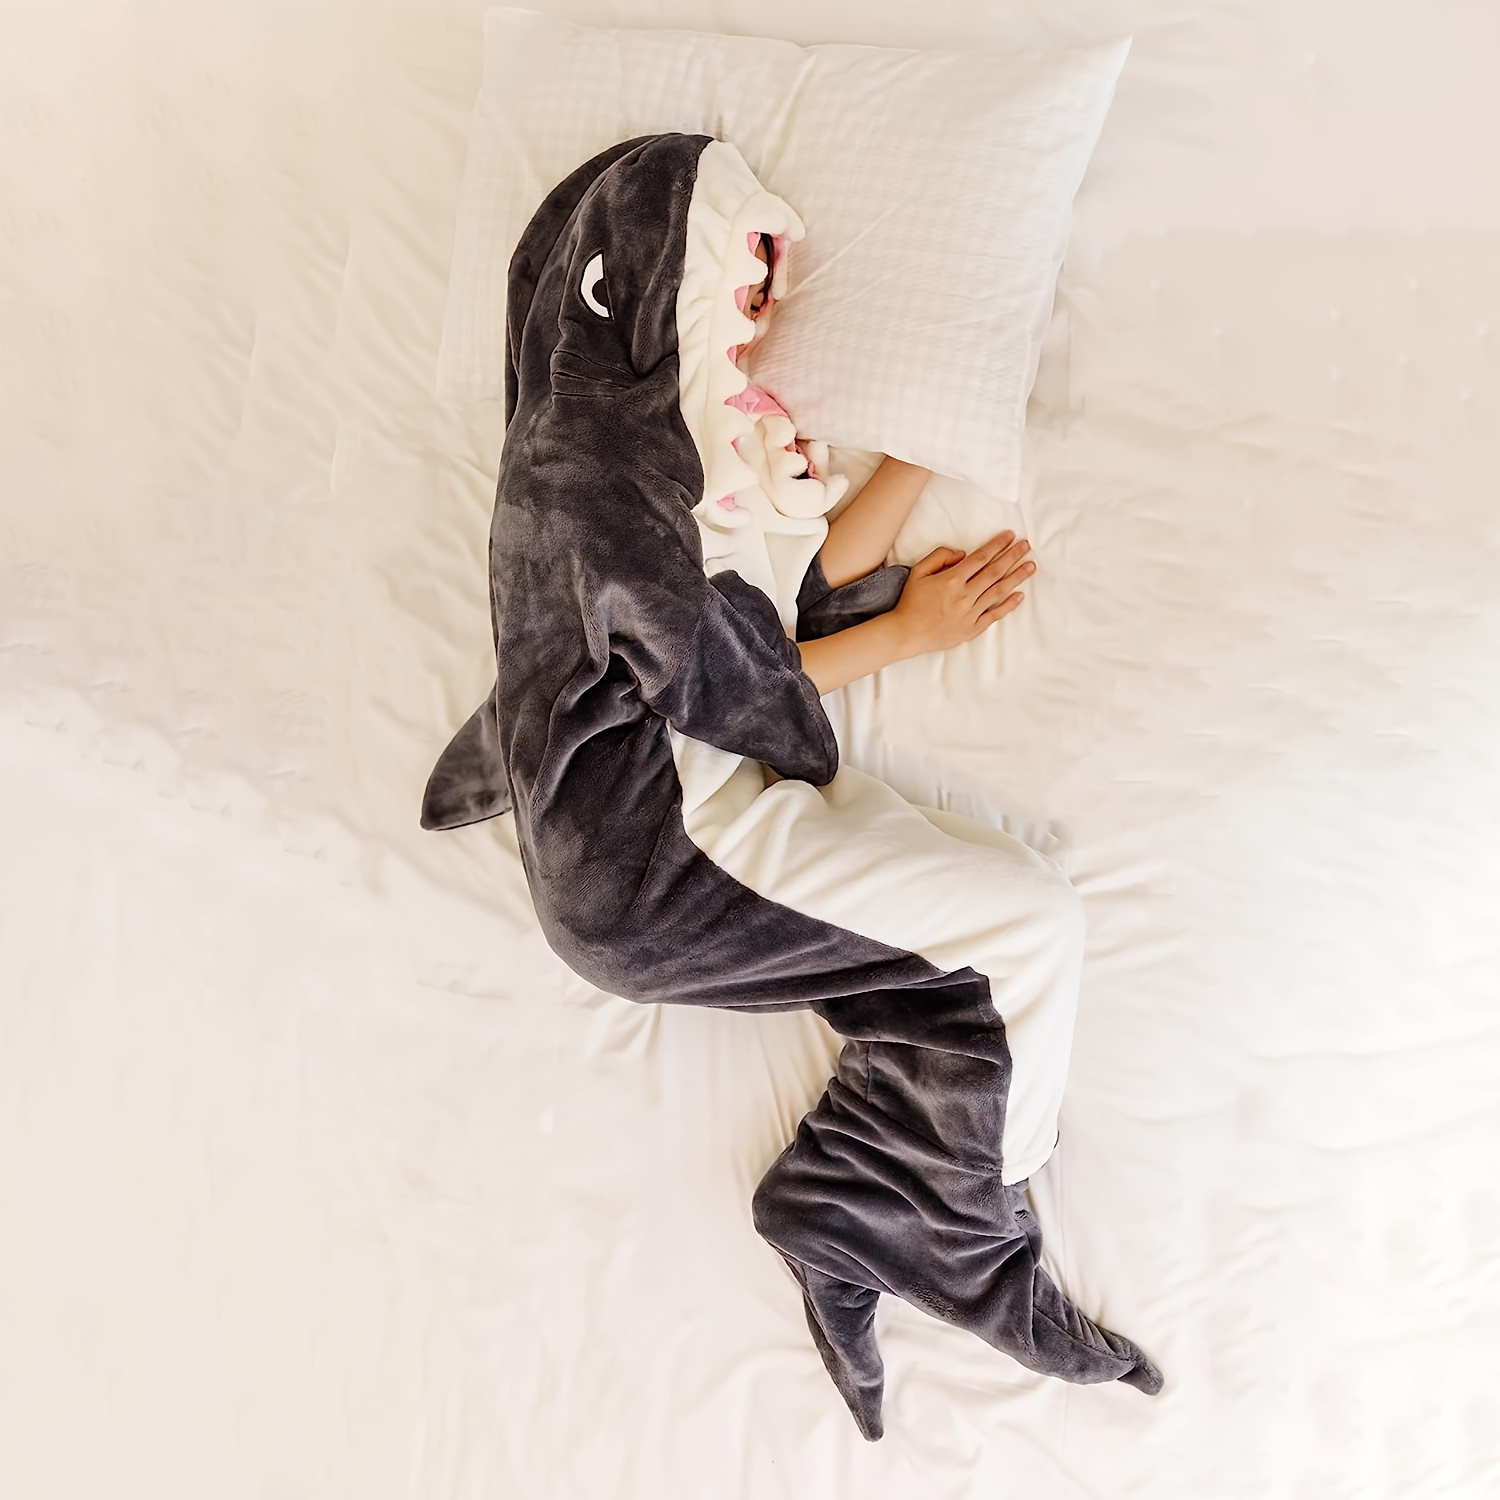 Shark Blanket Shark Sleeping Bag Tail Wearable Fleece Throw Blanket Adult  Kids Cosplay Shark Costume Gifts for Shark Lovers